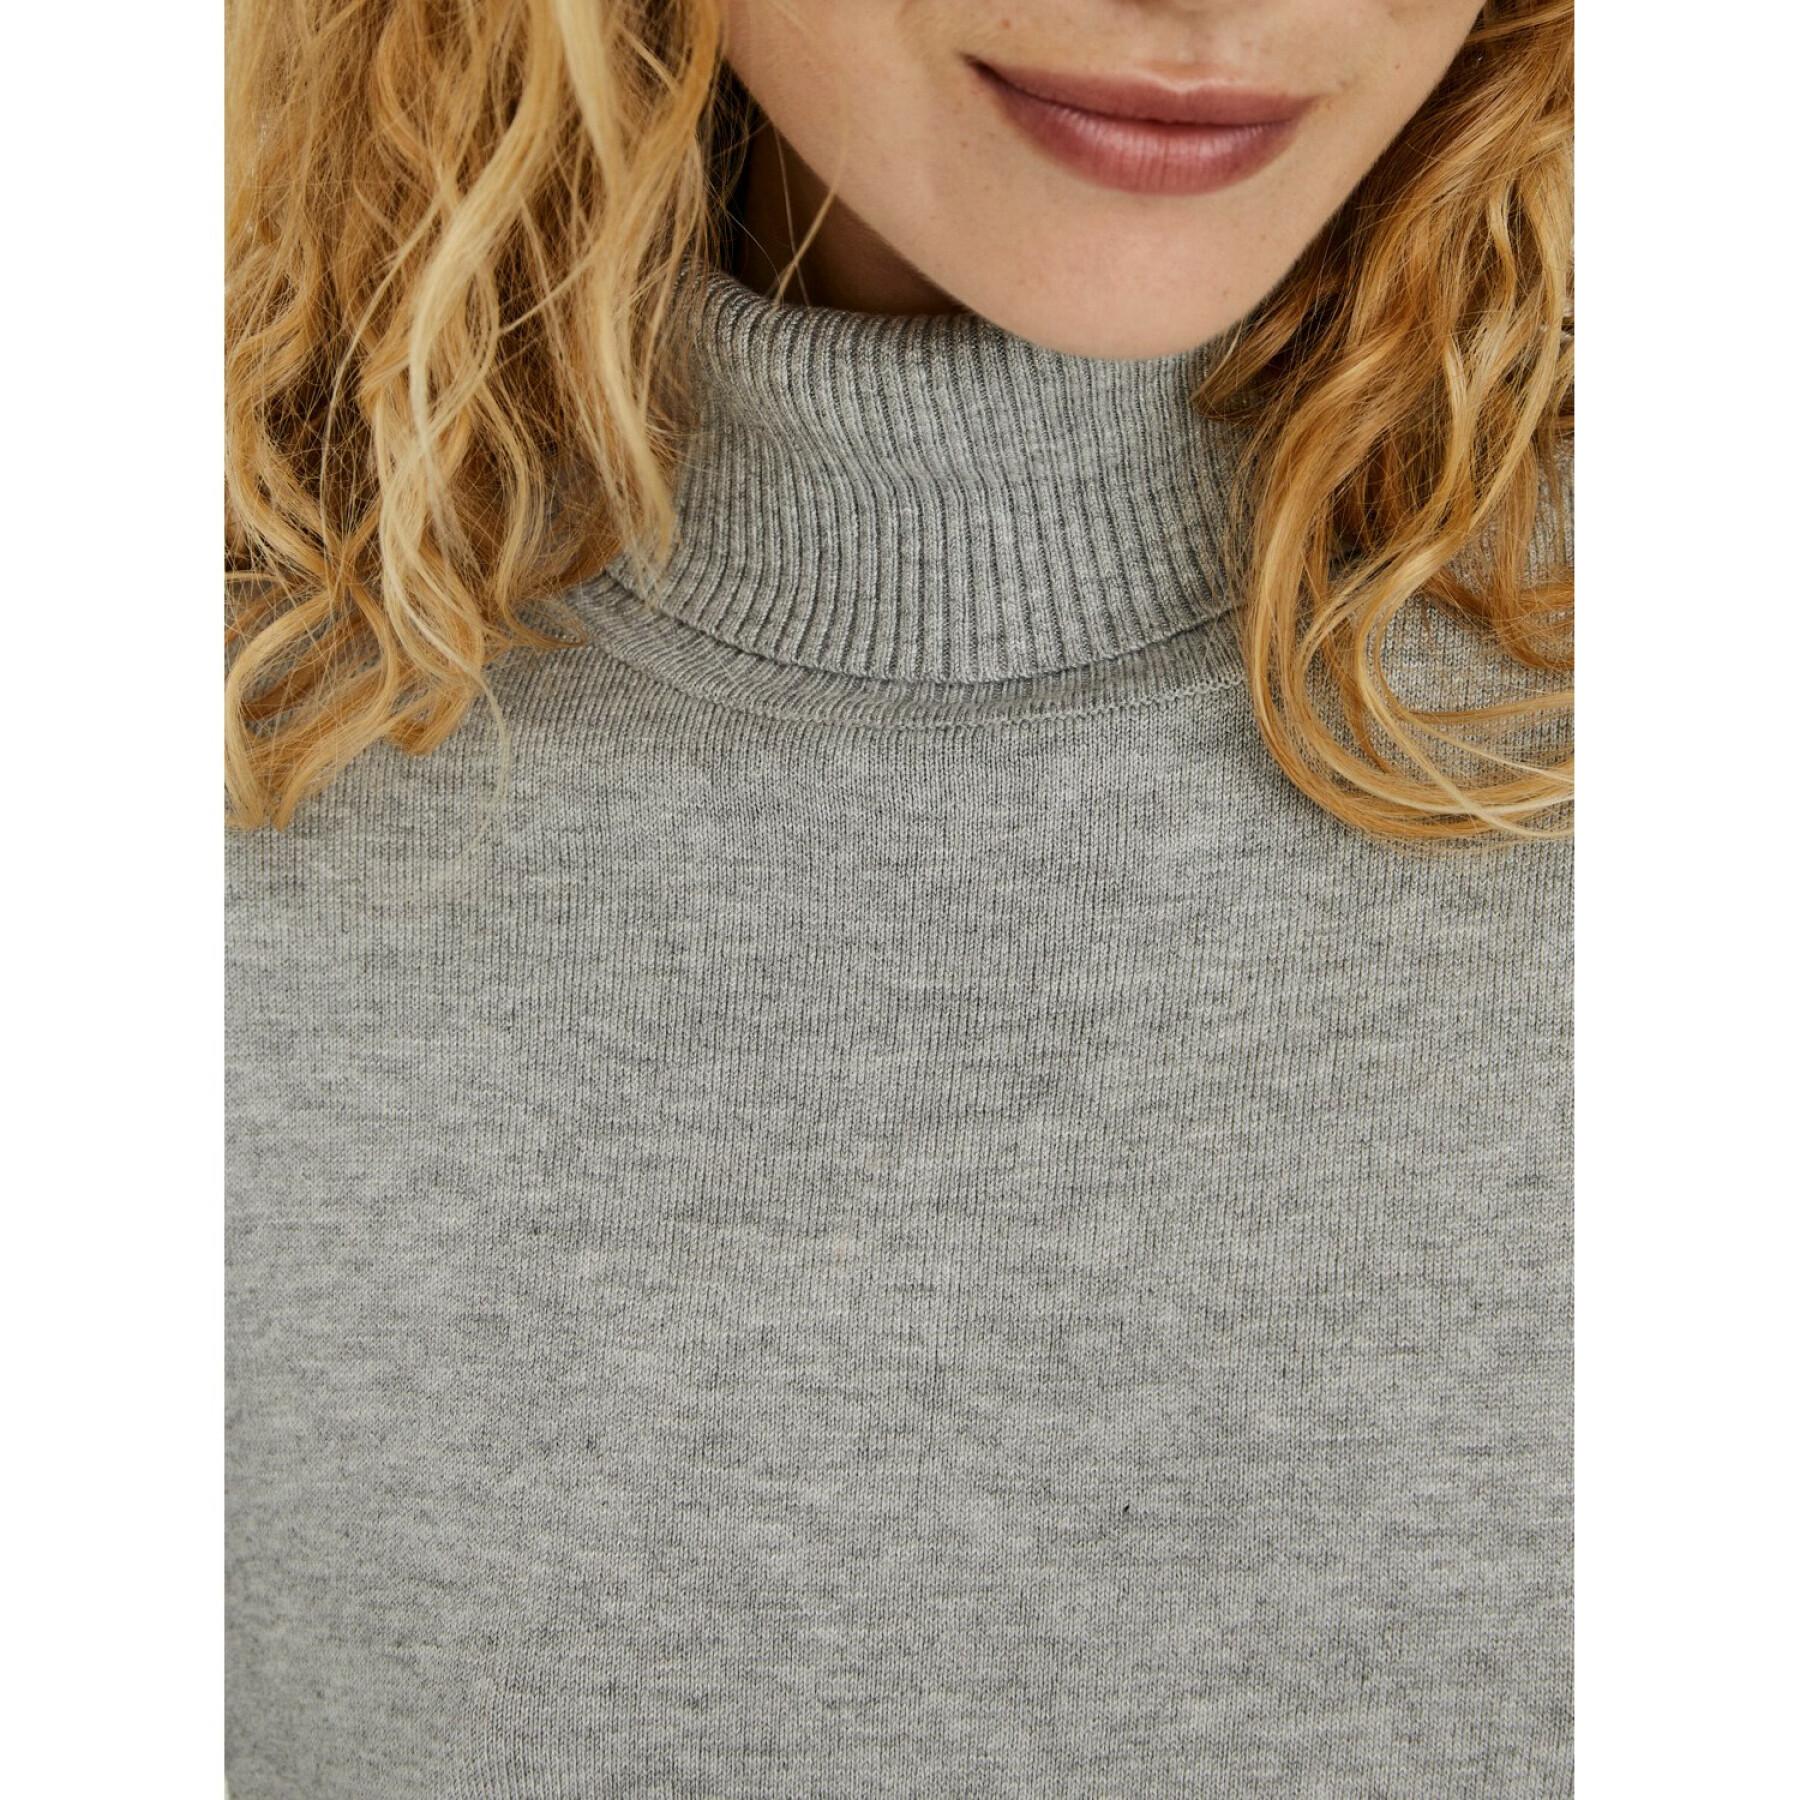 Women's turtleneck sweater Vero Moda vmglory